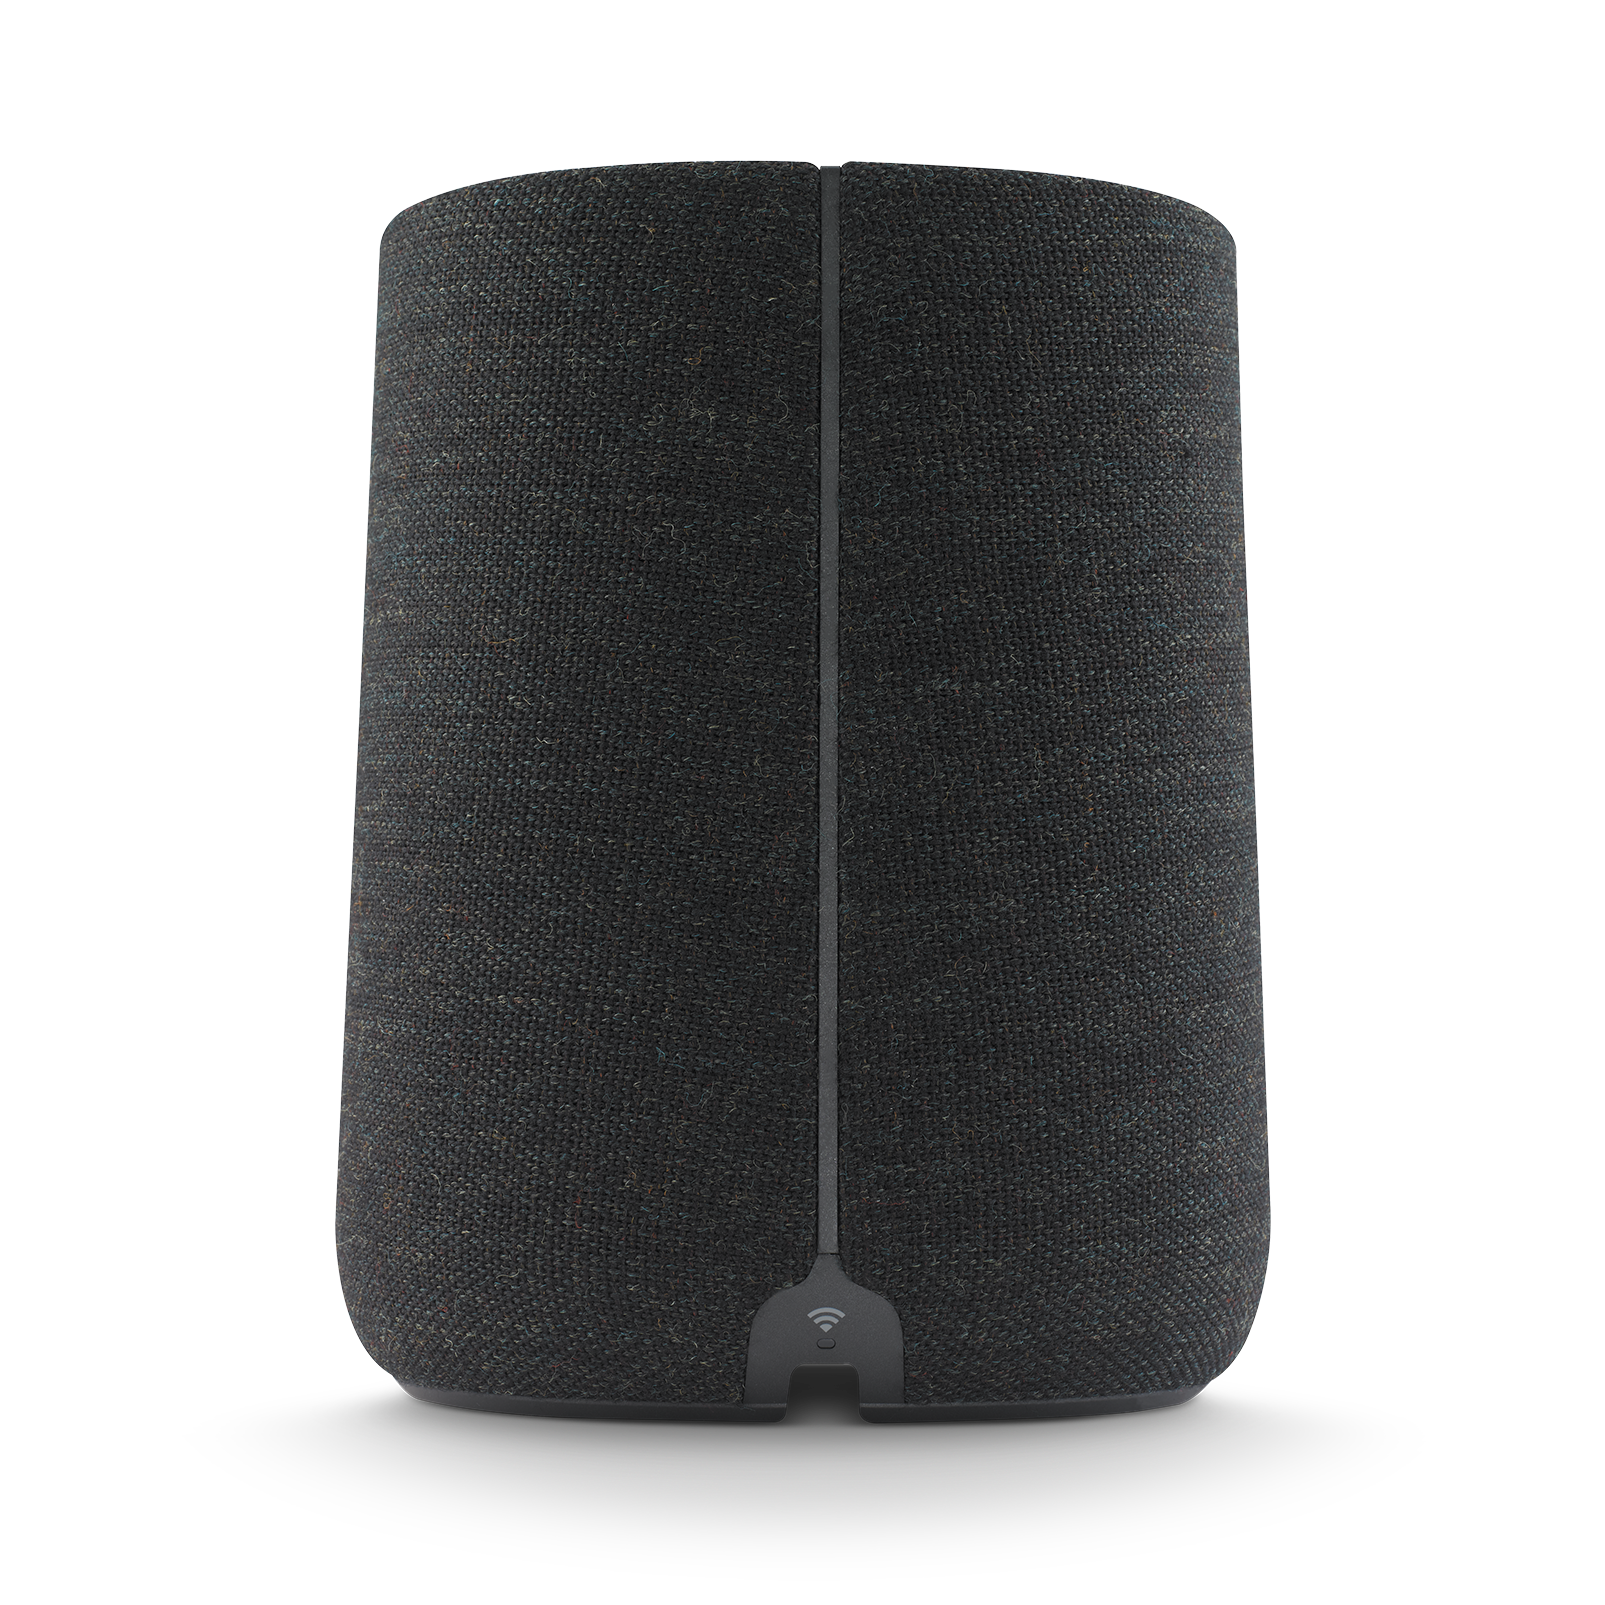 Harman Kardon Citation One MKII - Black - All-in-one smart speaker with room-filling sound - Back